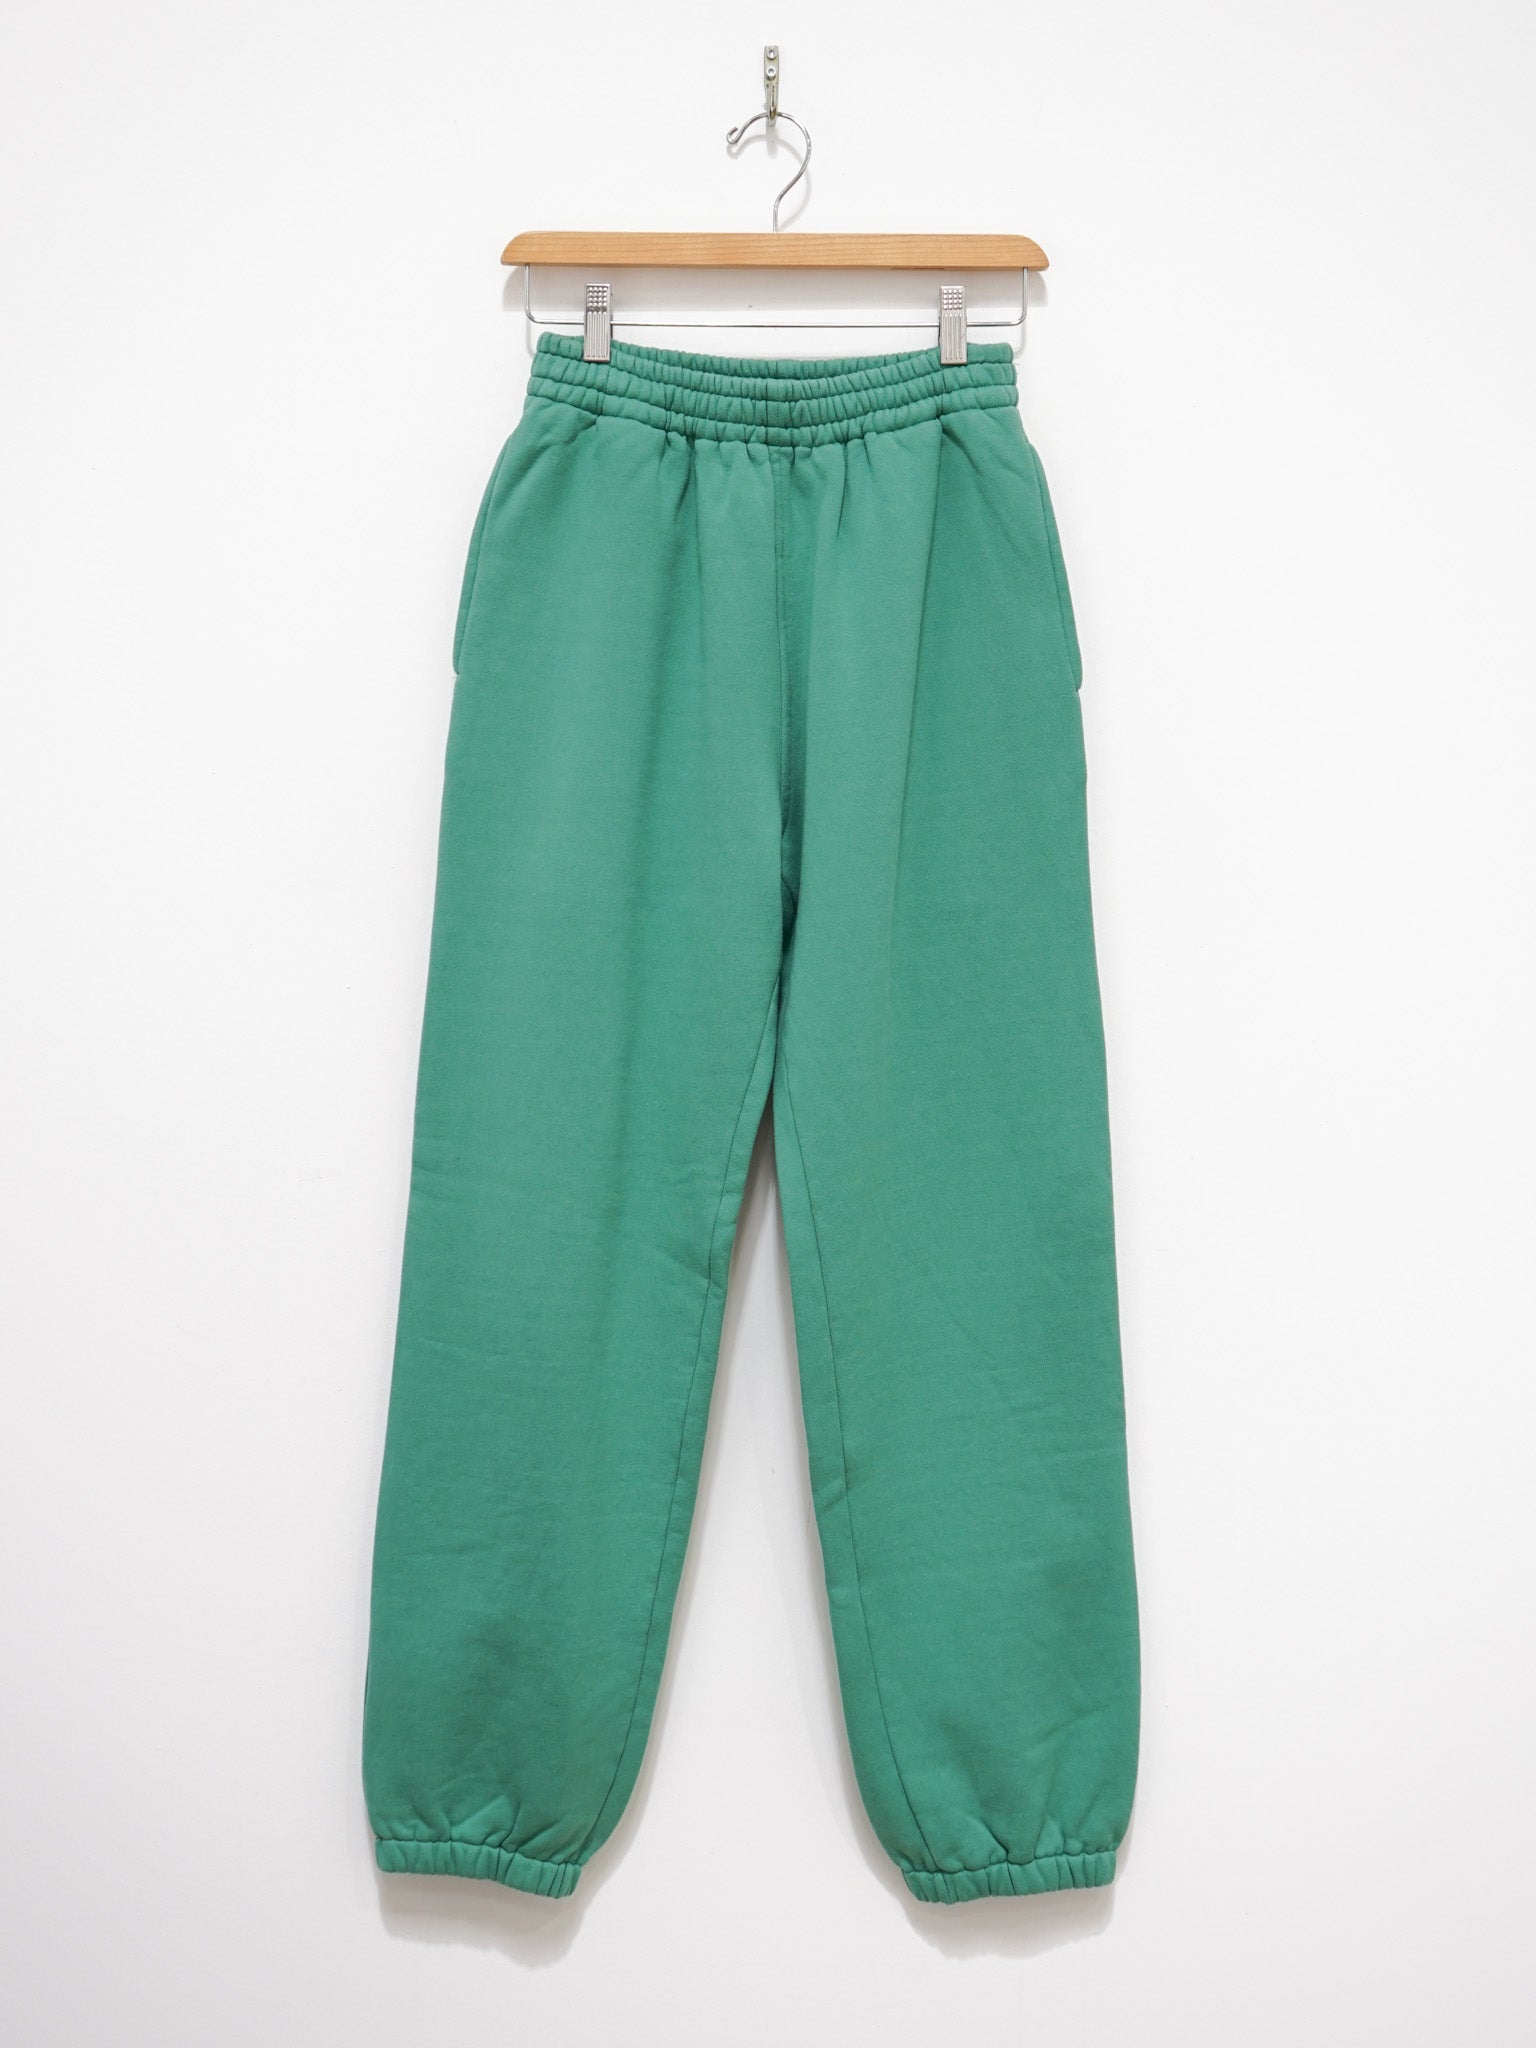 Namu Shop - Auralee High Count Heavy Sweatpants - Jade Green